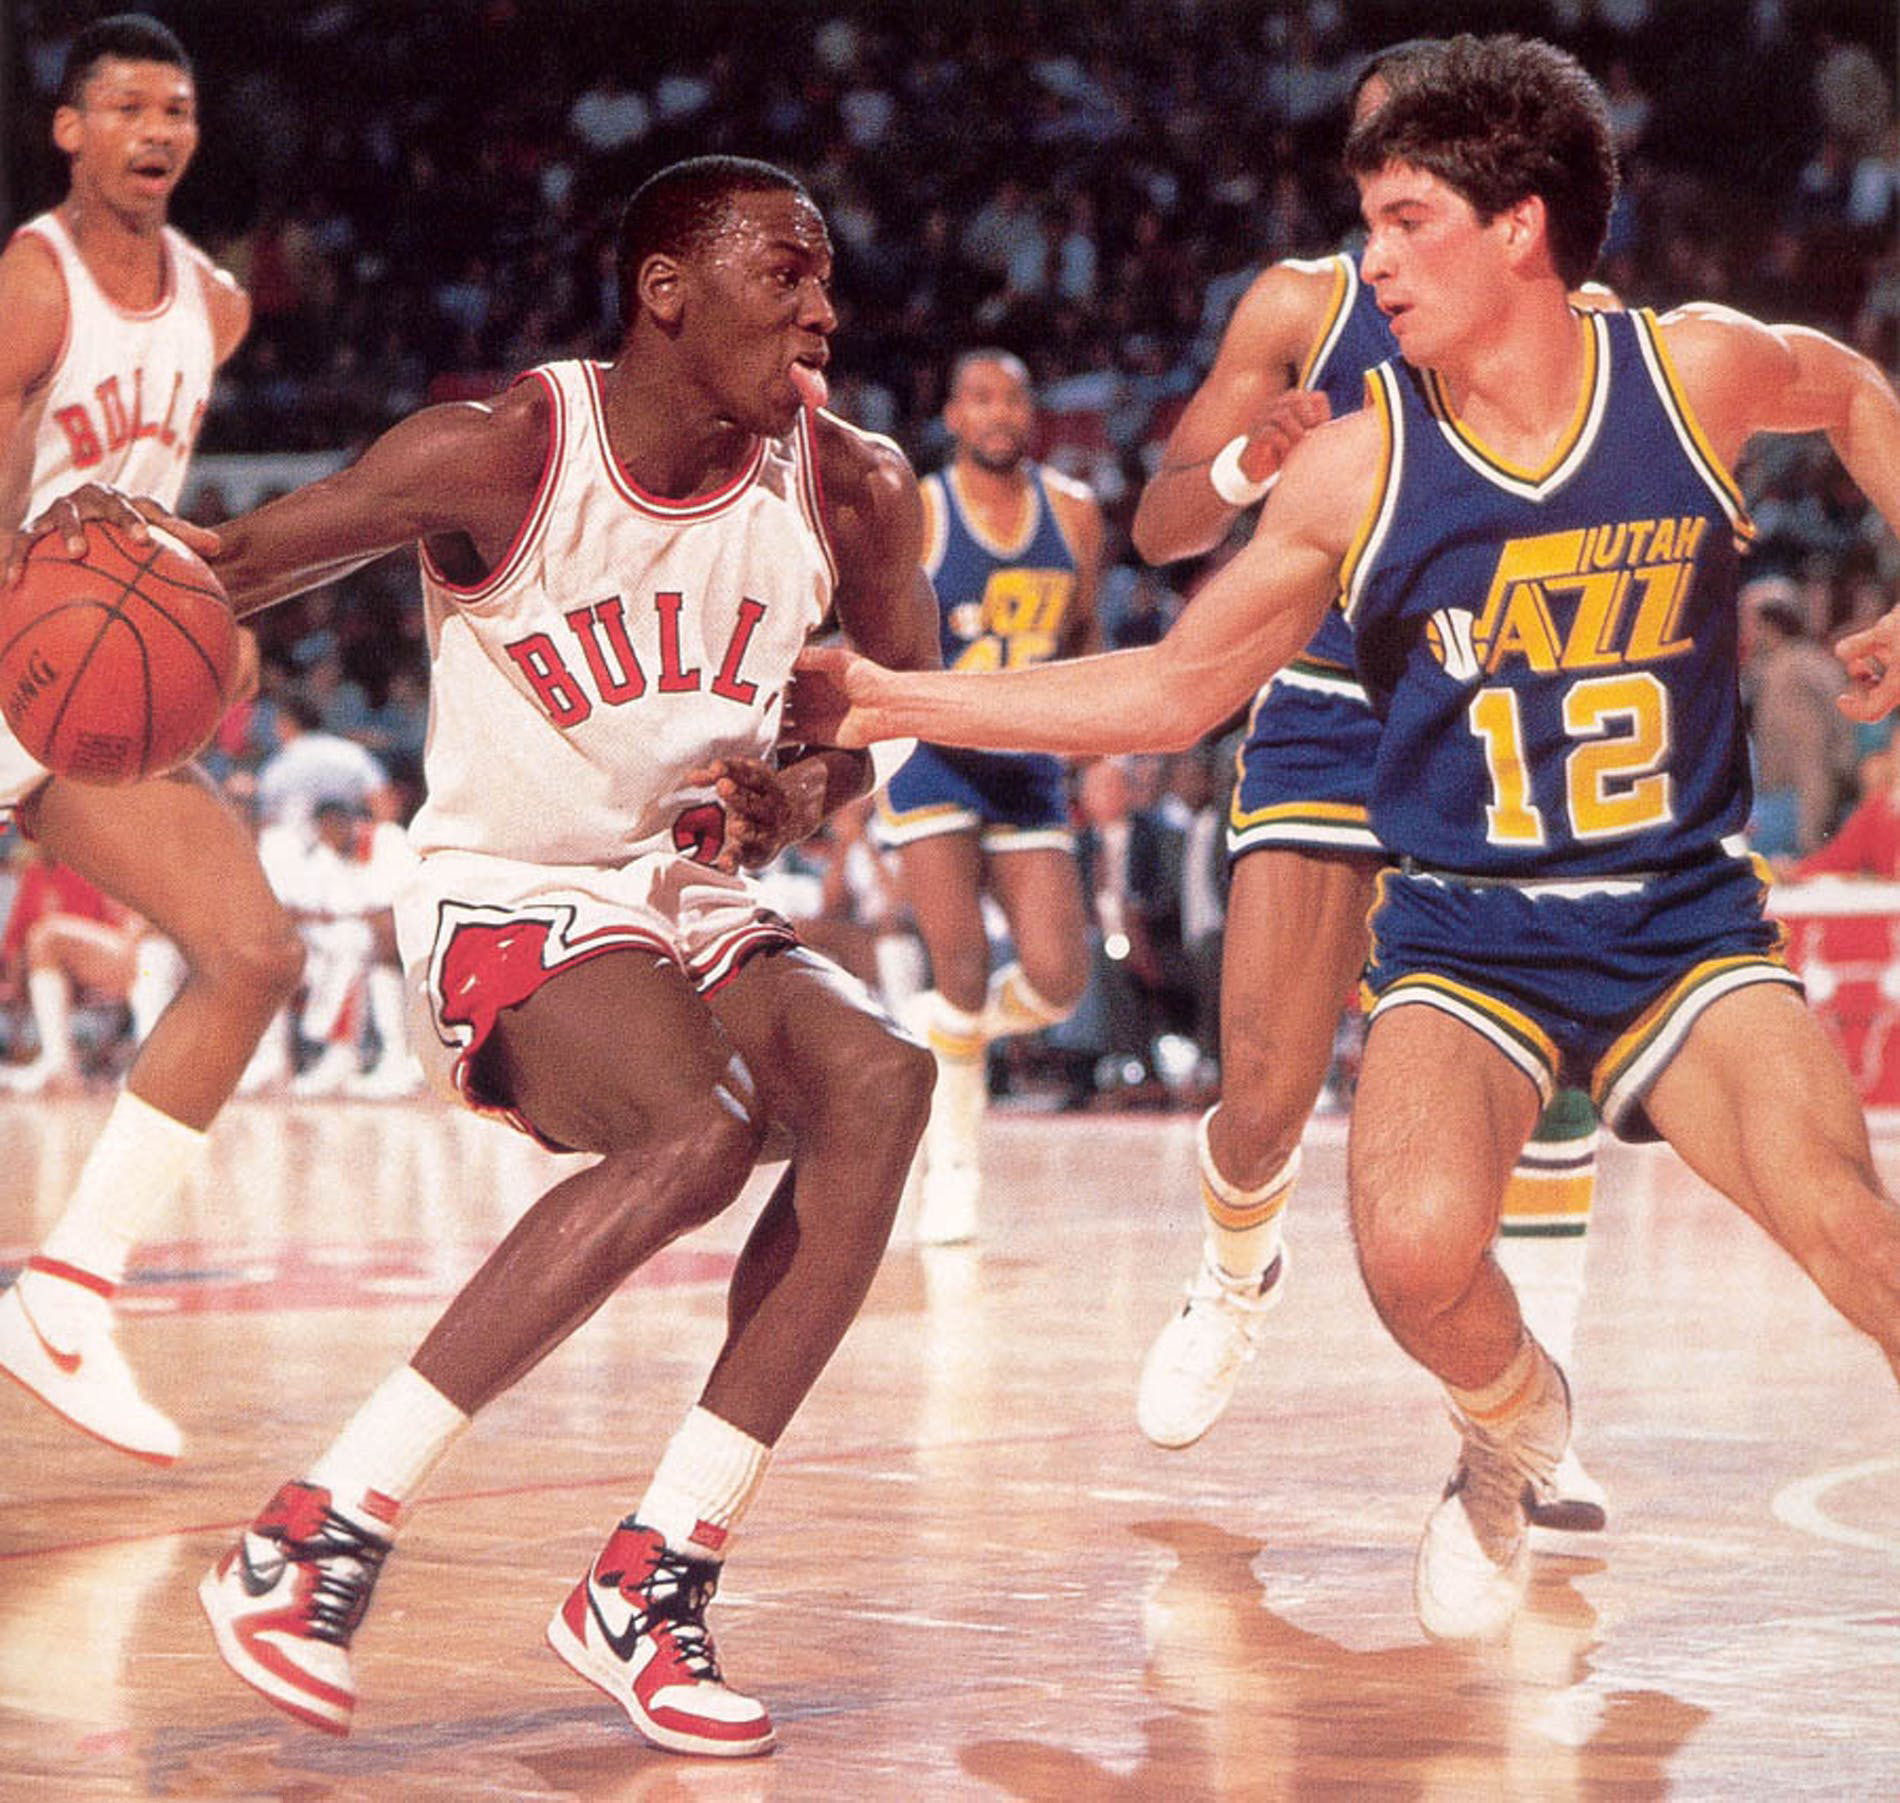 Michael Jordan playing at Madison Square Garden in the Air Jordan 1s in 1985